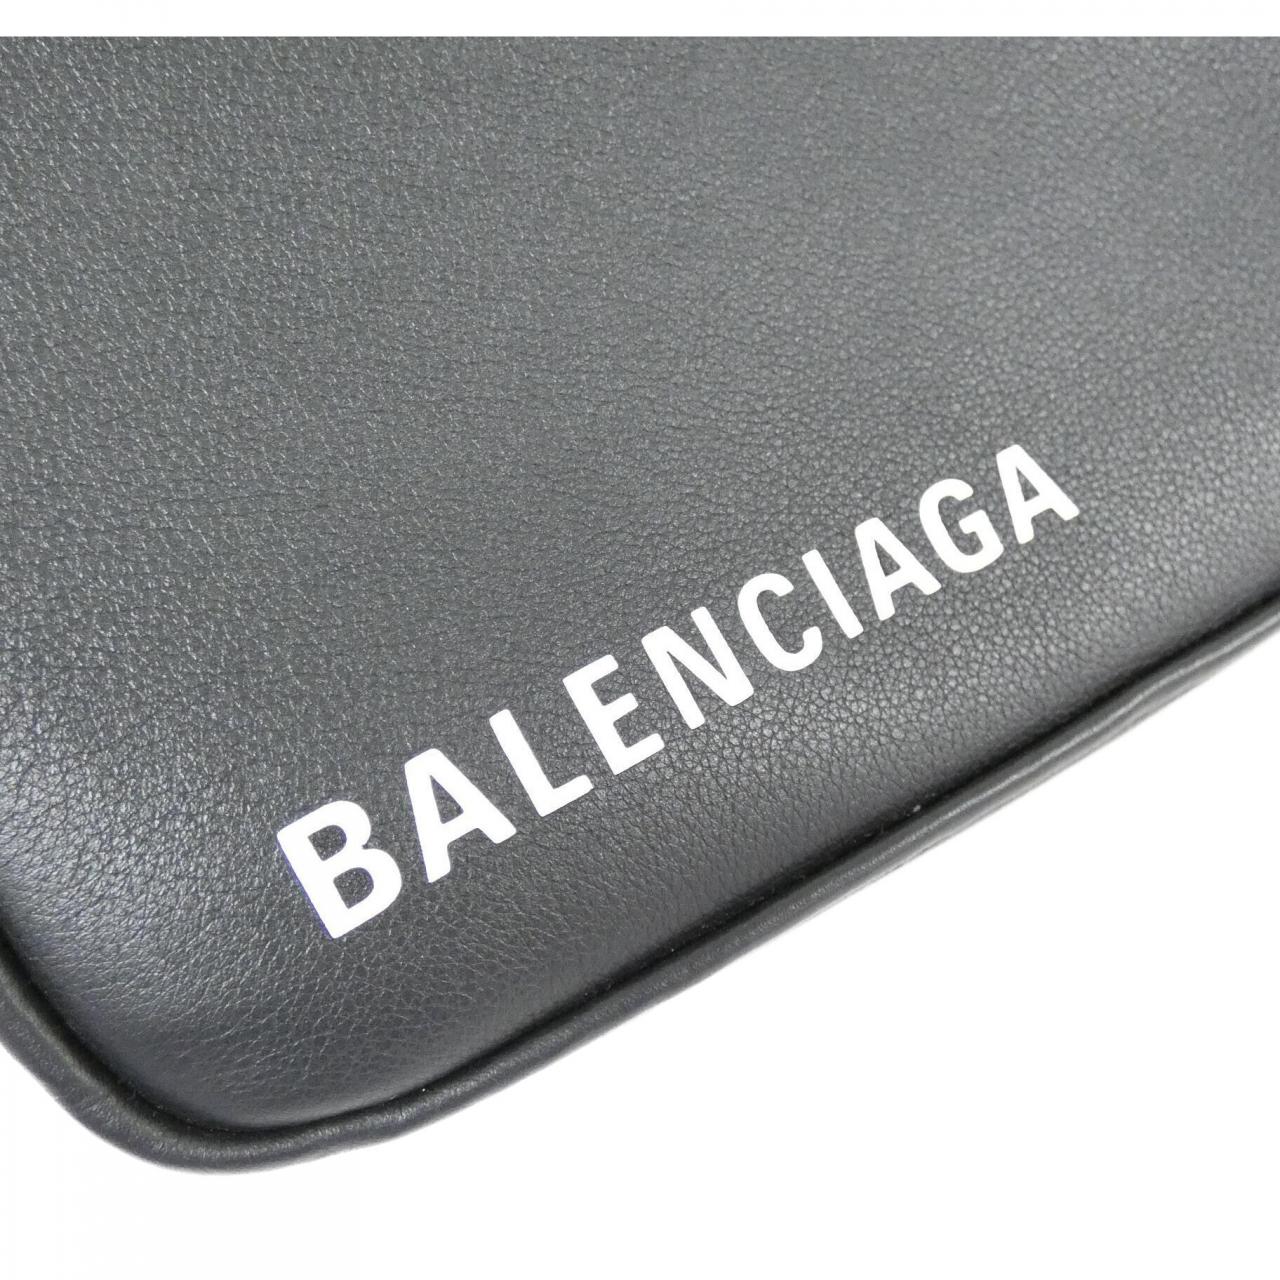 BALENCIAGA TRIANGLE POCHETTE M 476976 C8K02 Bag